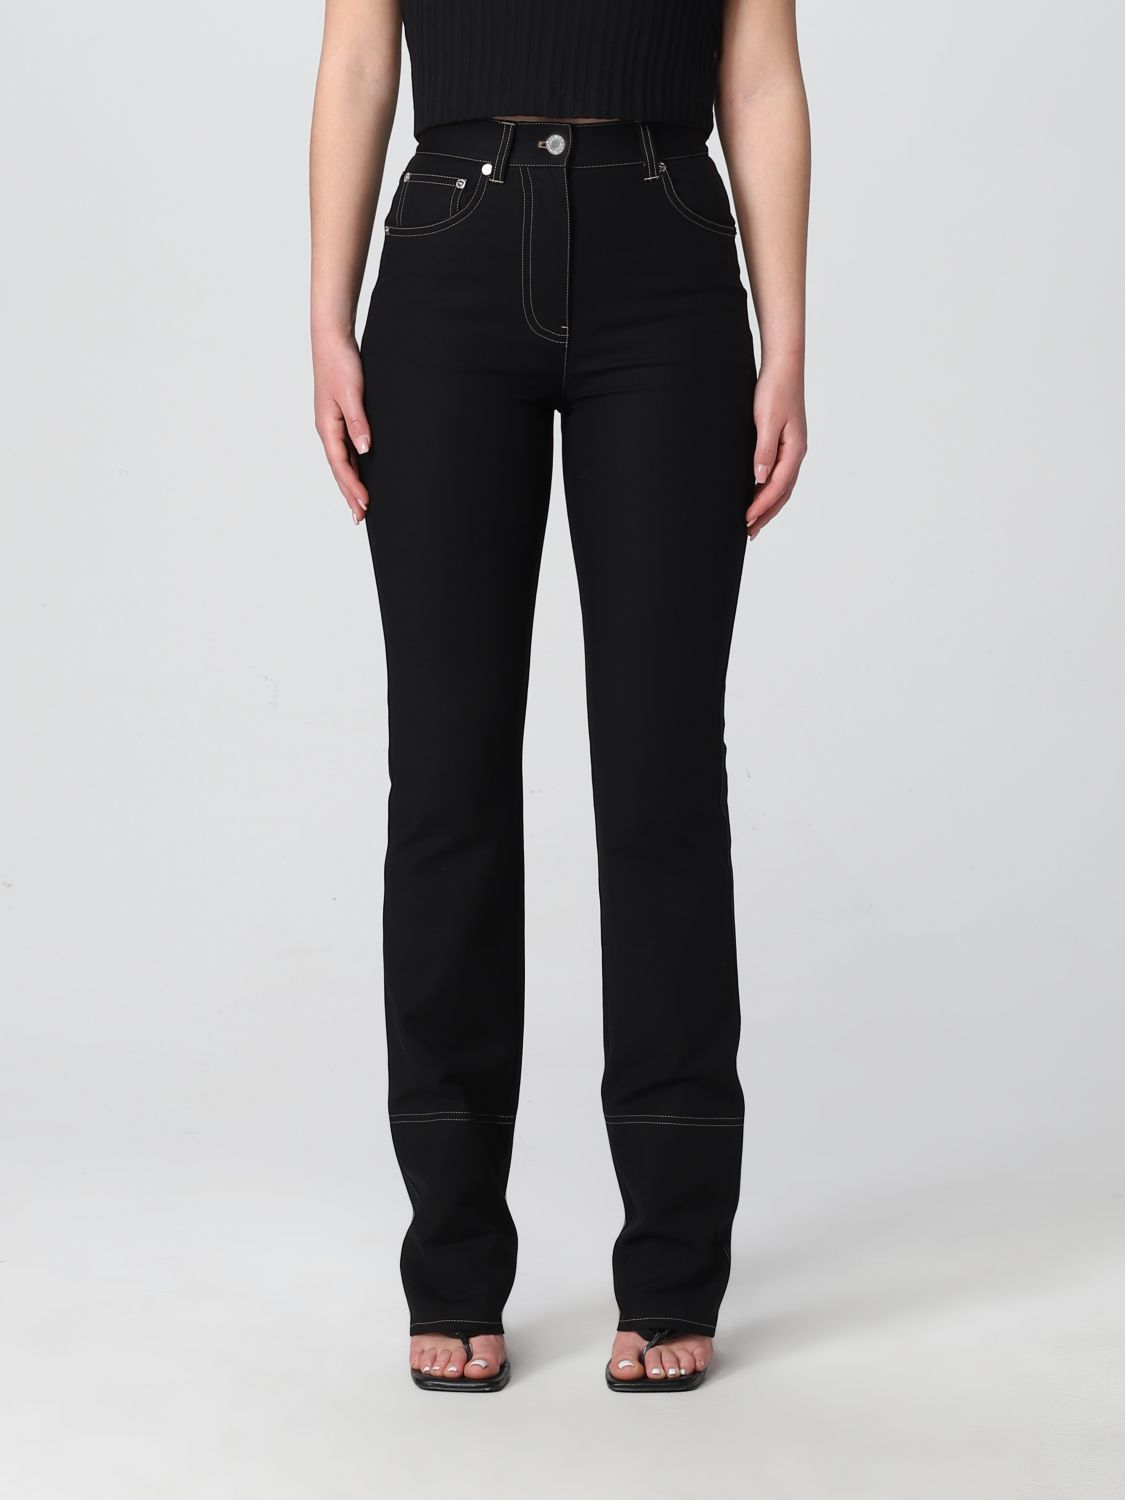 Helmut Lang Jeans In Cotton Denim In Black